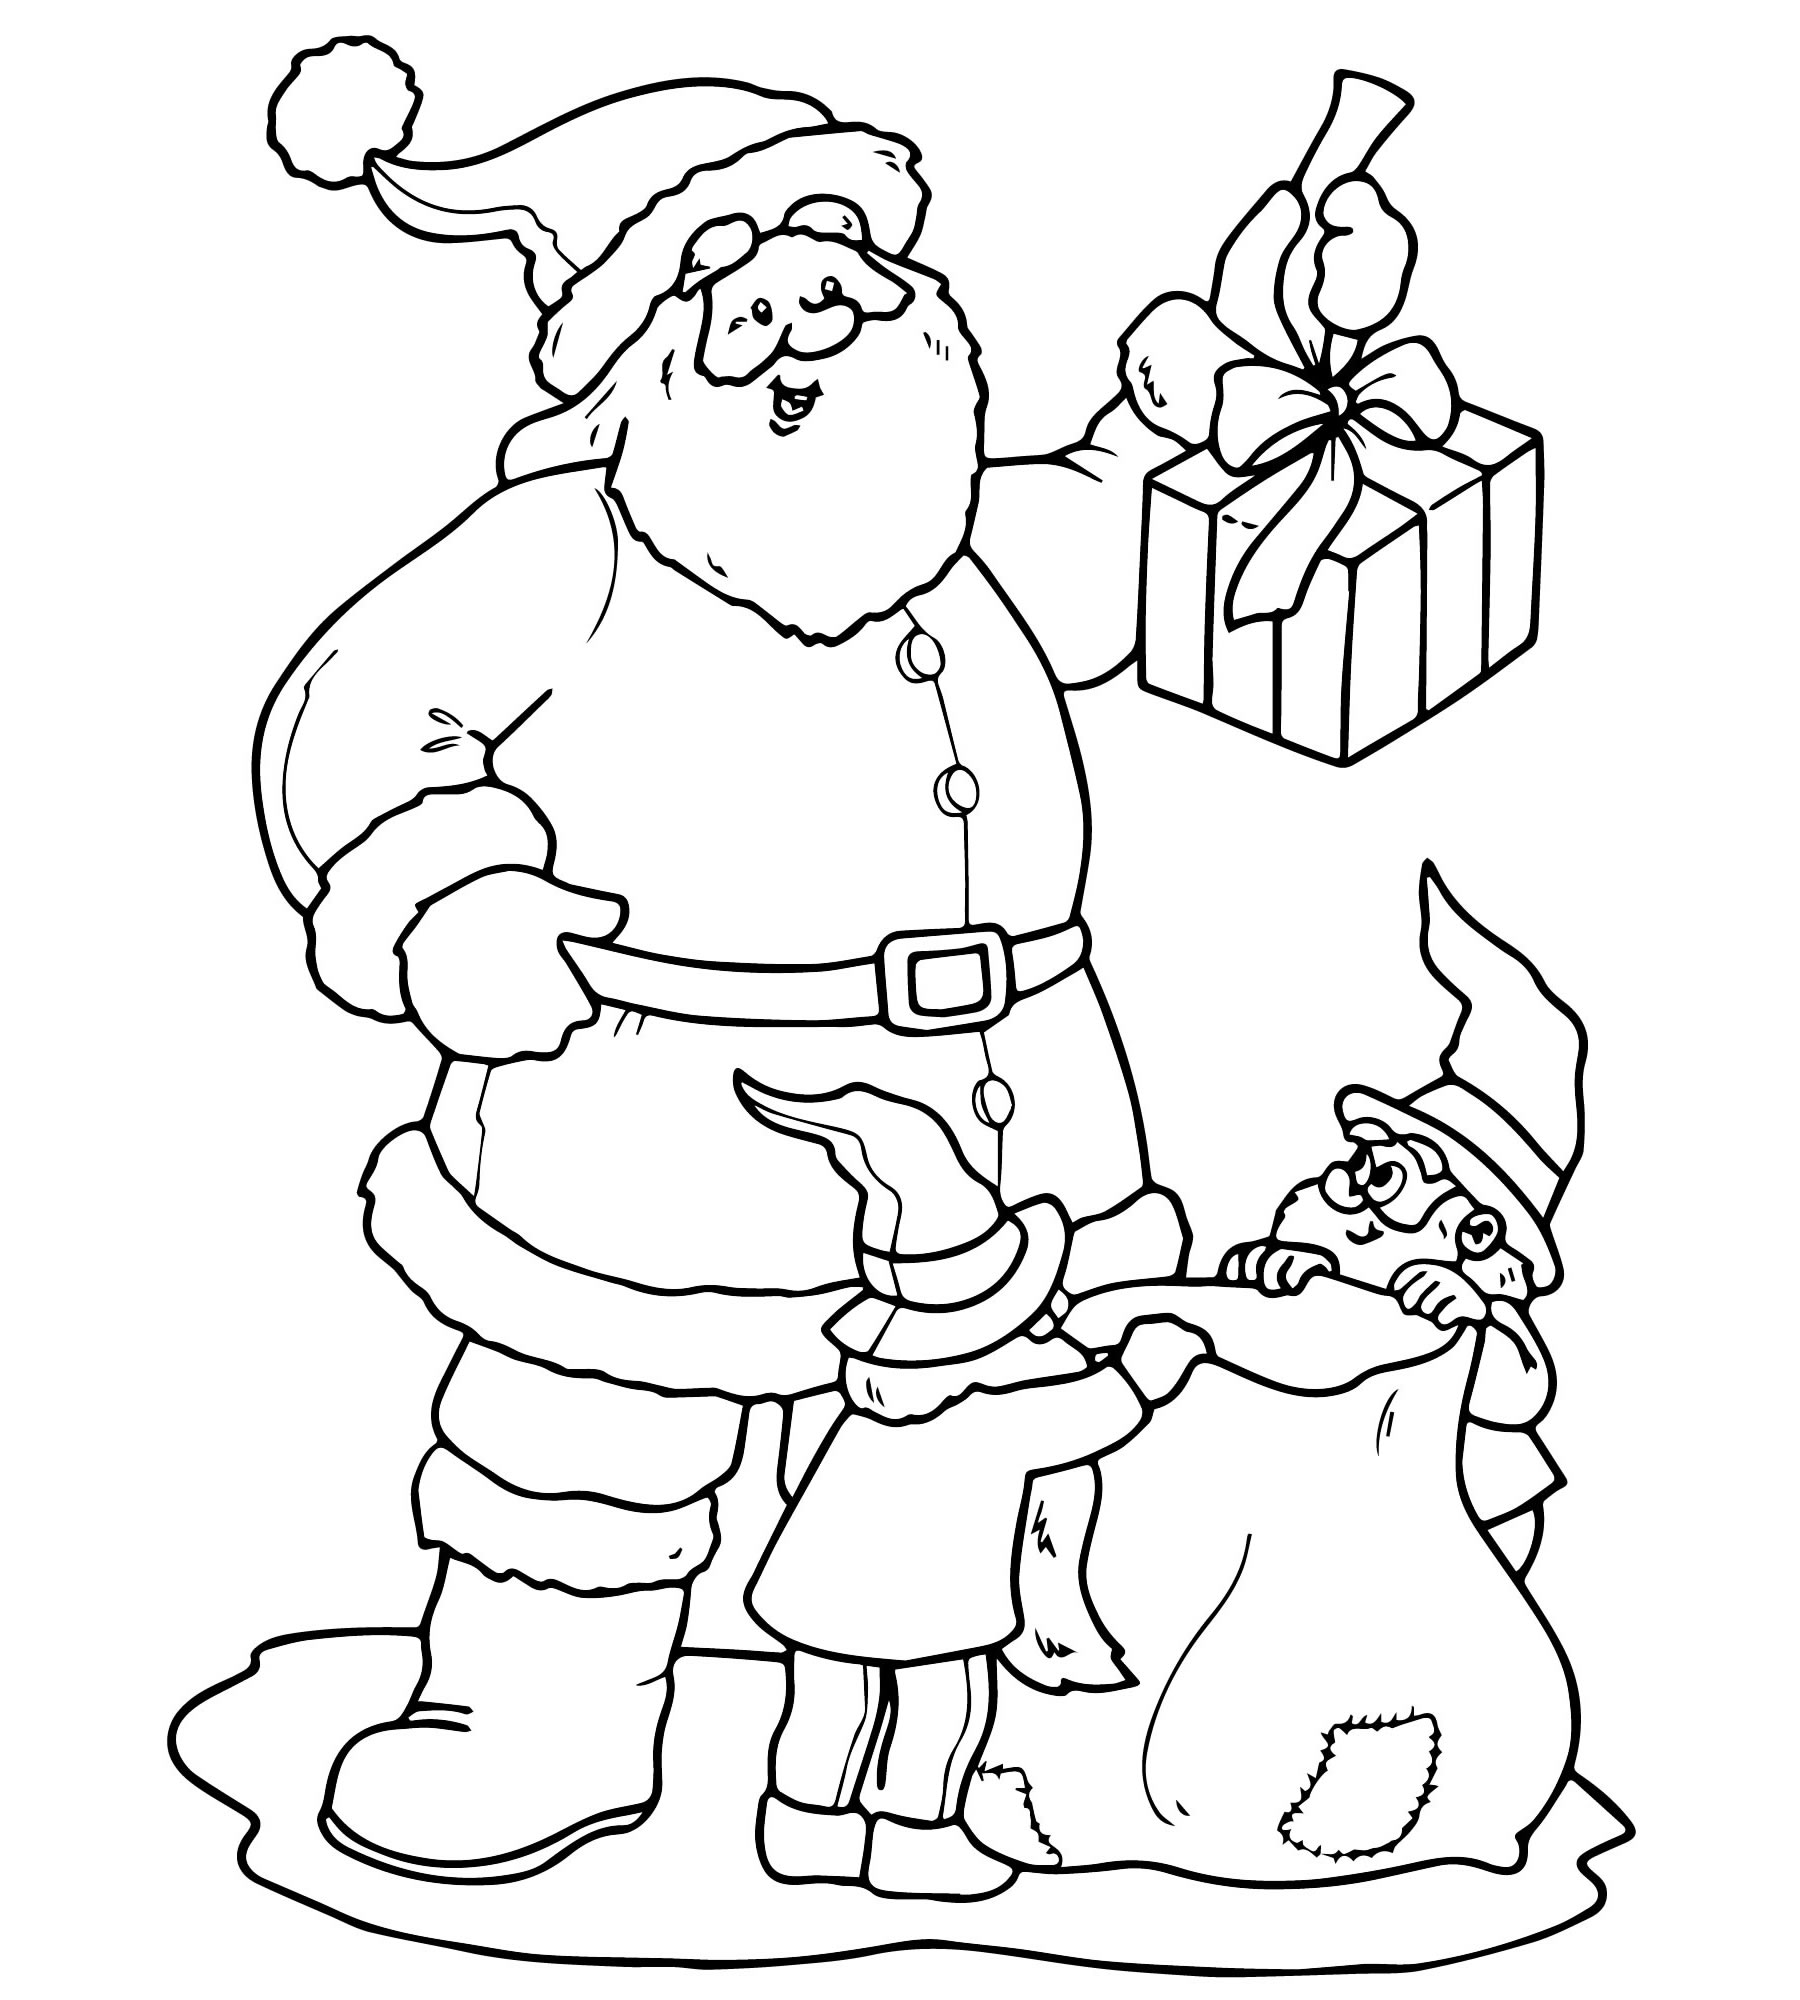 Санта-Клаус с подарками раскраска для детей